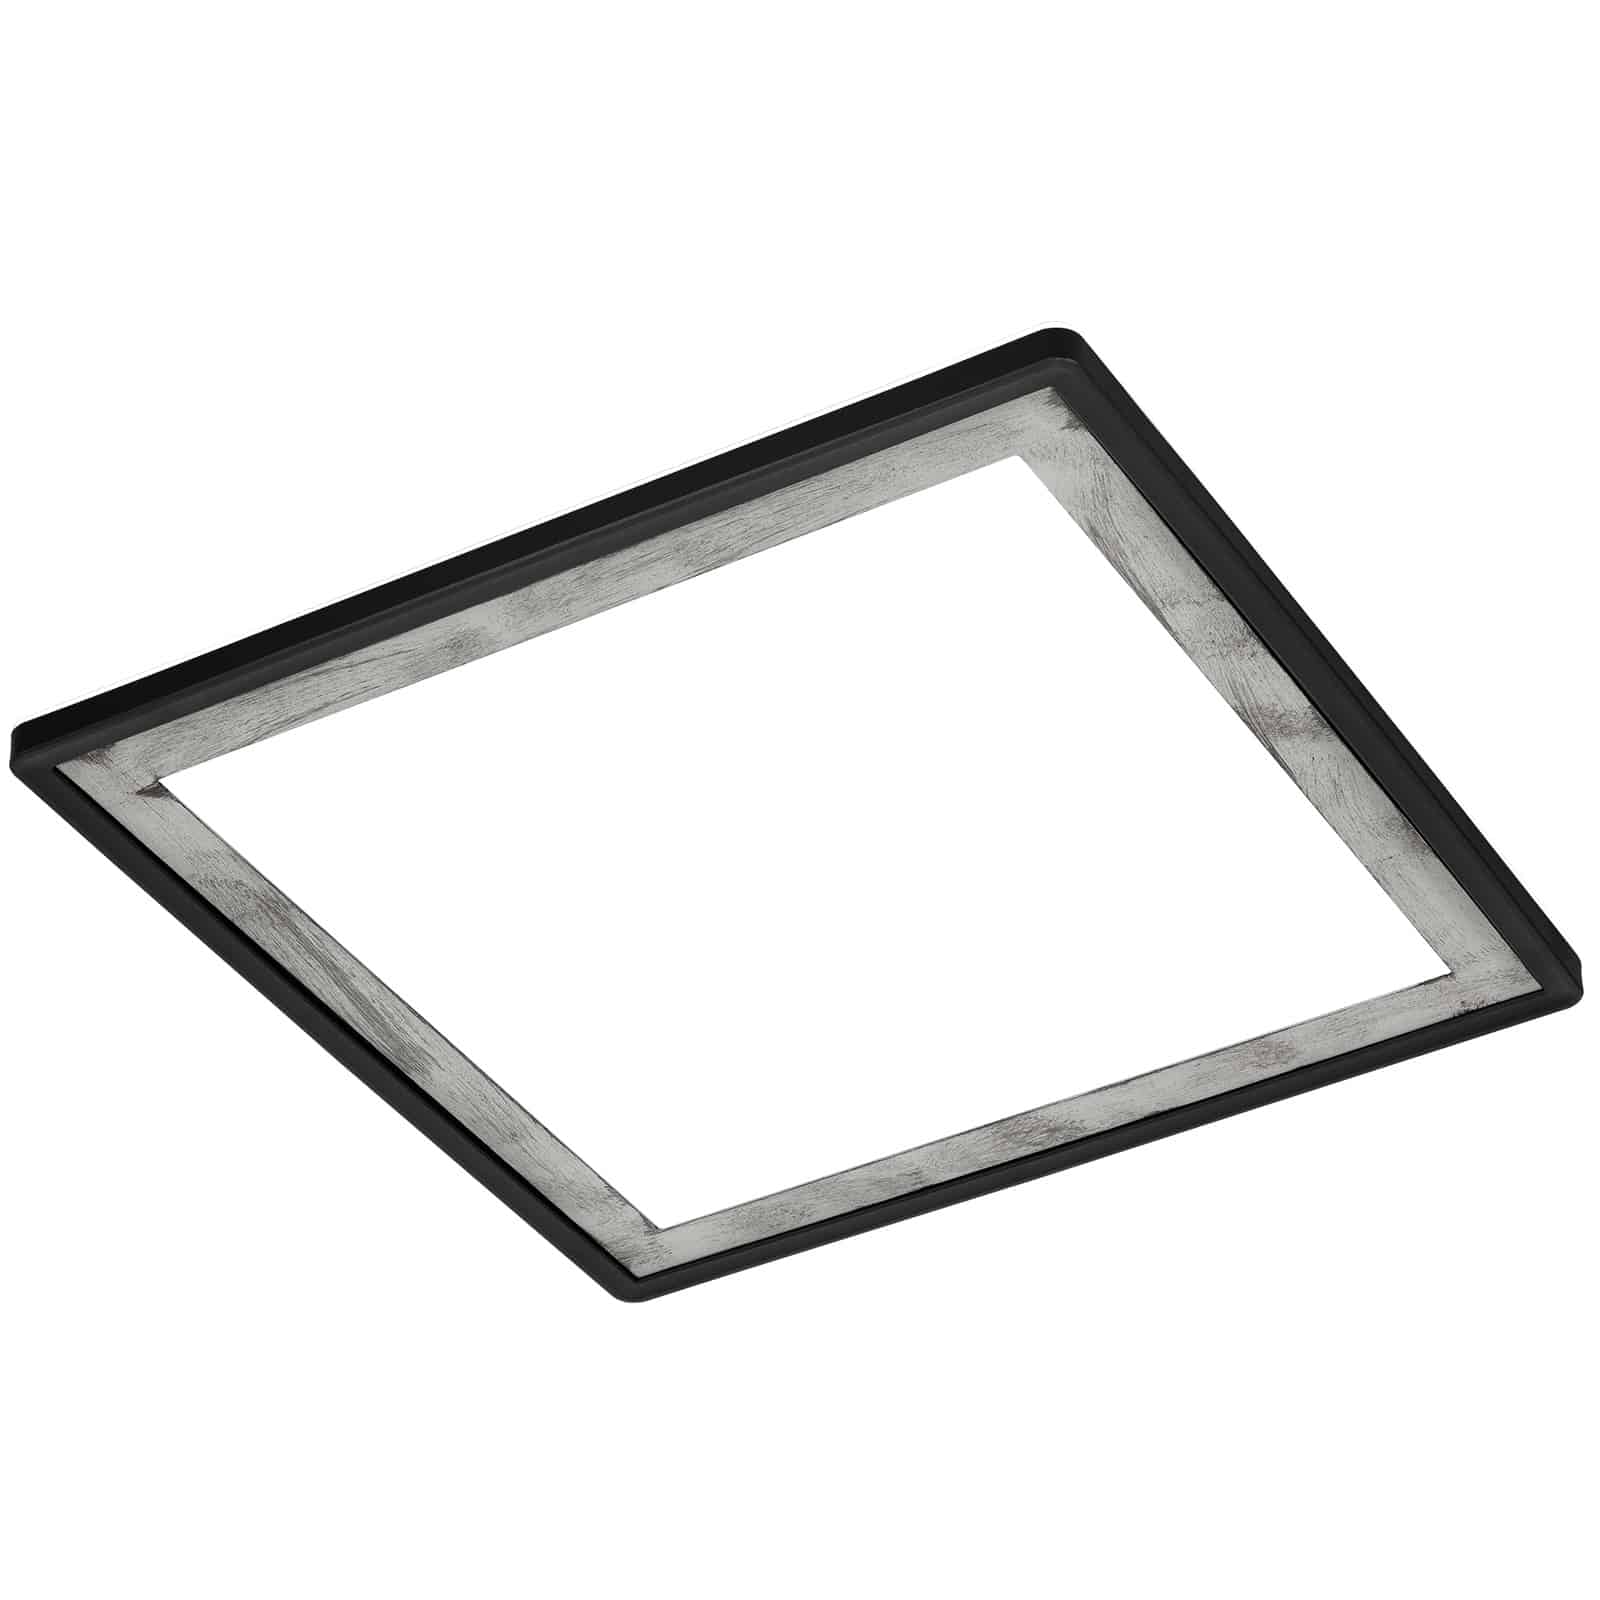 Ultraflaches LED Panel mit LED Backlight, 42 cm, LED, 18 W, 2400 lm, schwarz-silber